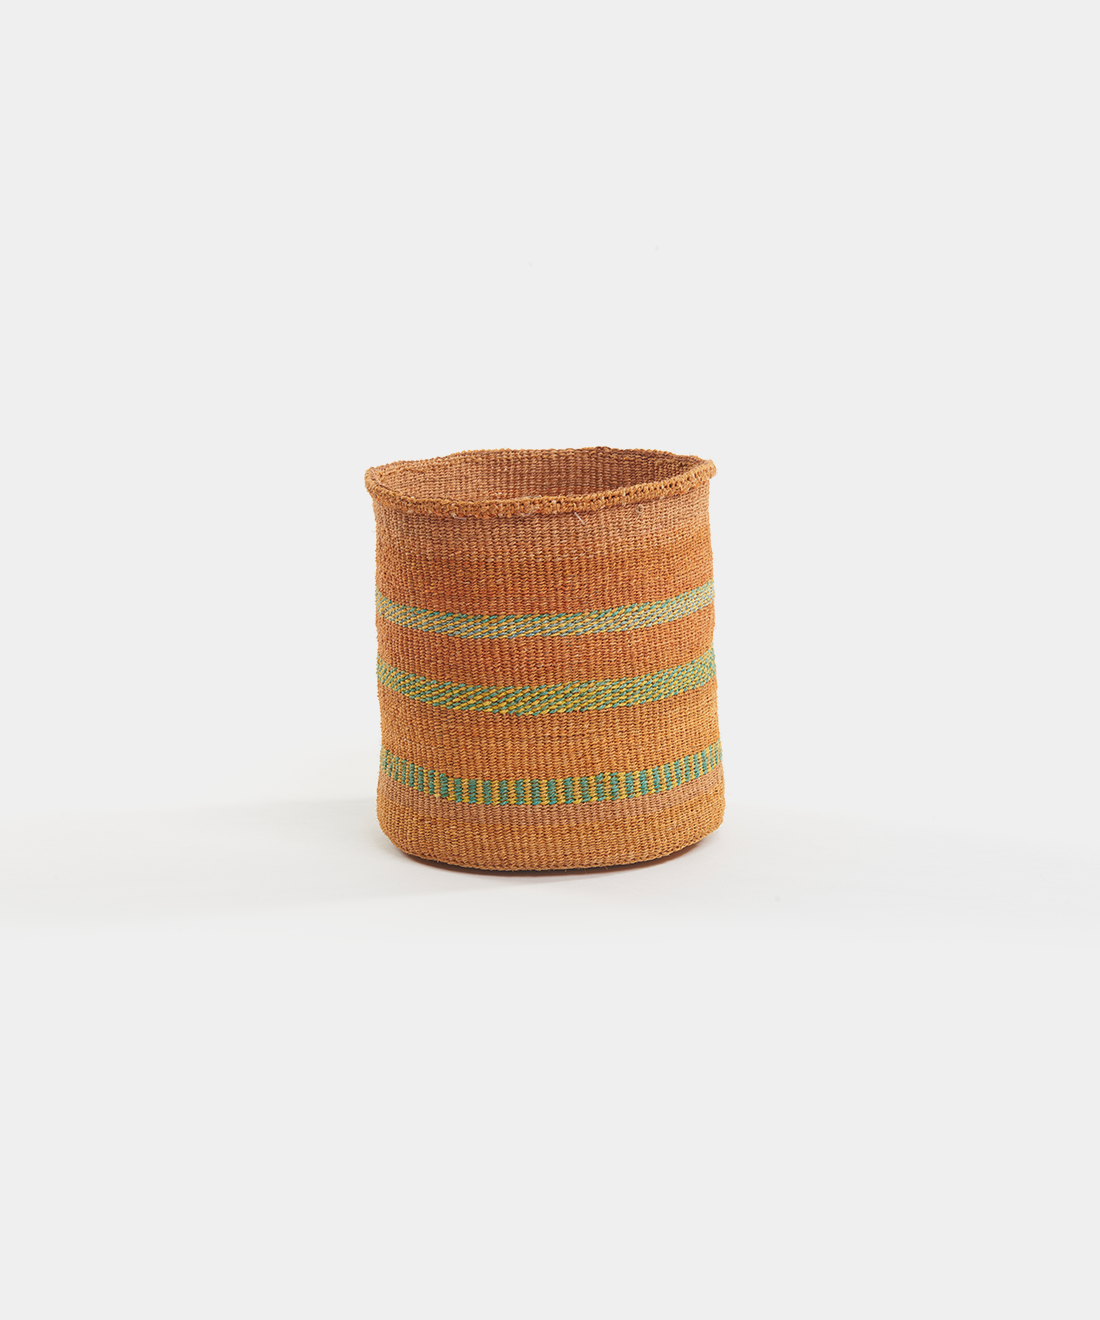 Medium Practical Weave Basket, 2